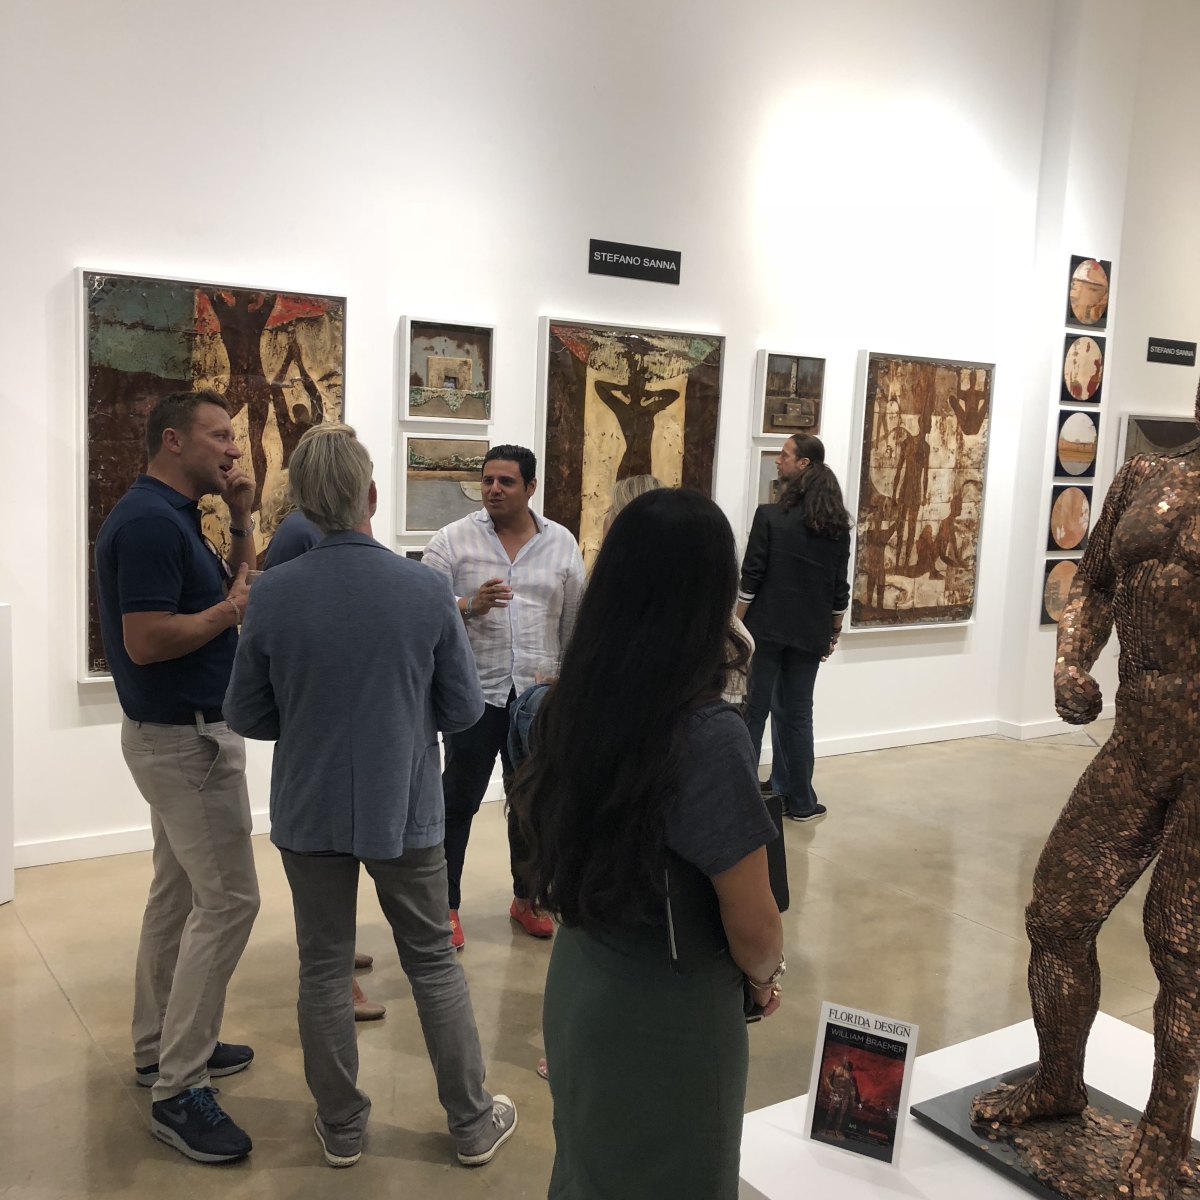 William Braemer Fine Art Gallery, Wynwood/ Miami Opening Night Artist Stefano Sanna